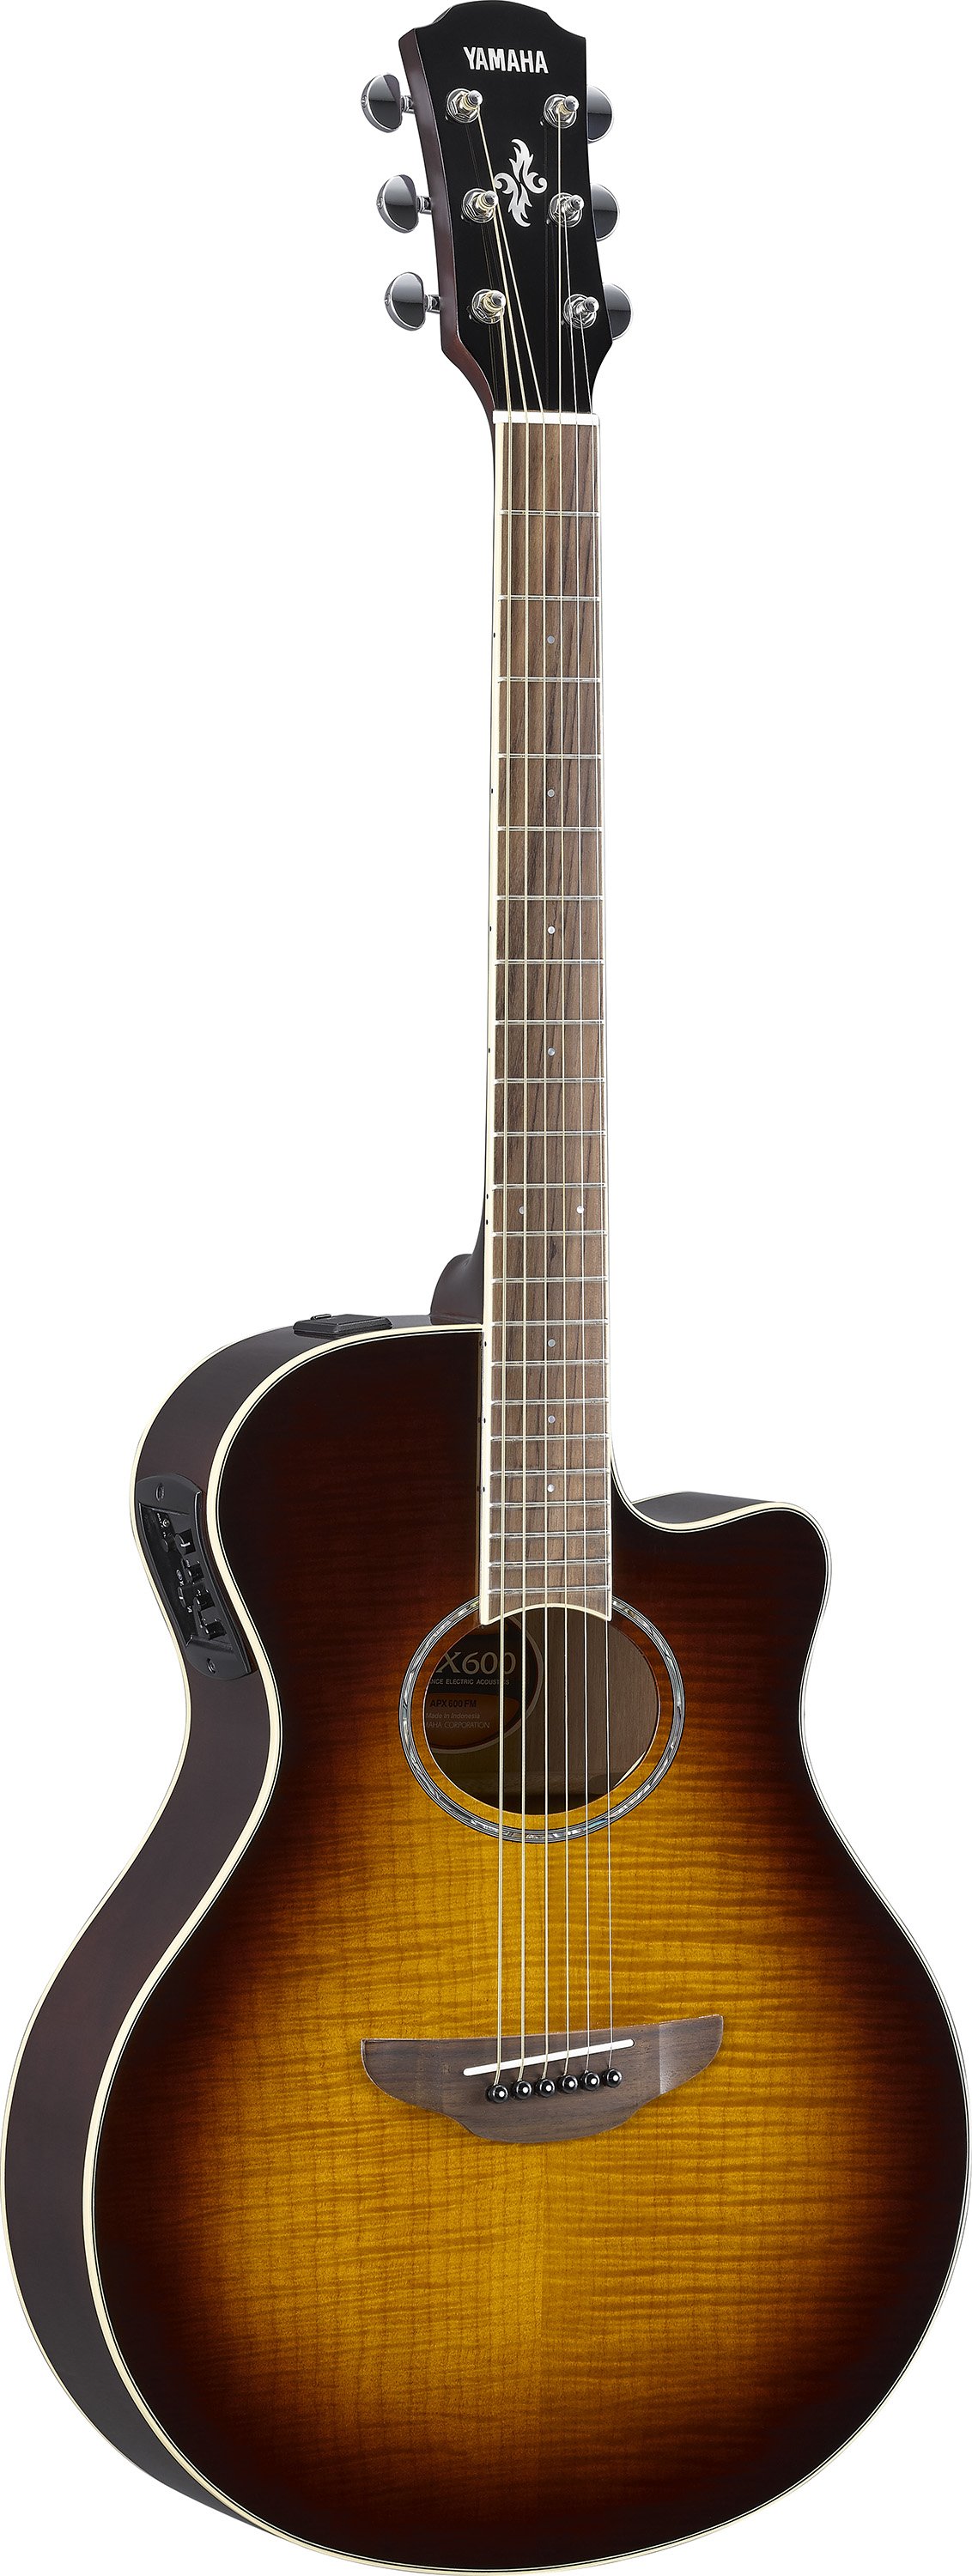 Yamaha APX600 FM Western Guitar (Tobacco Brown Sunburst)